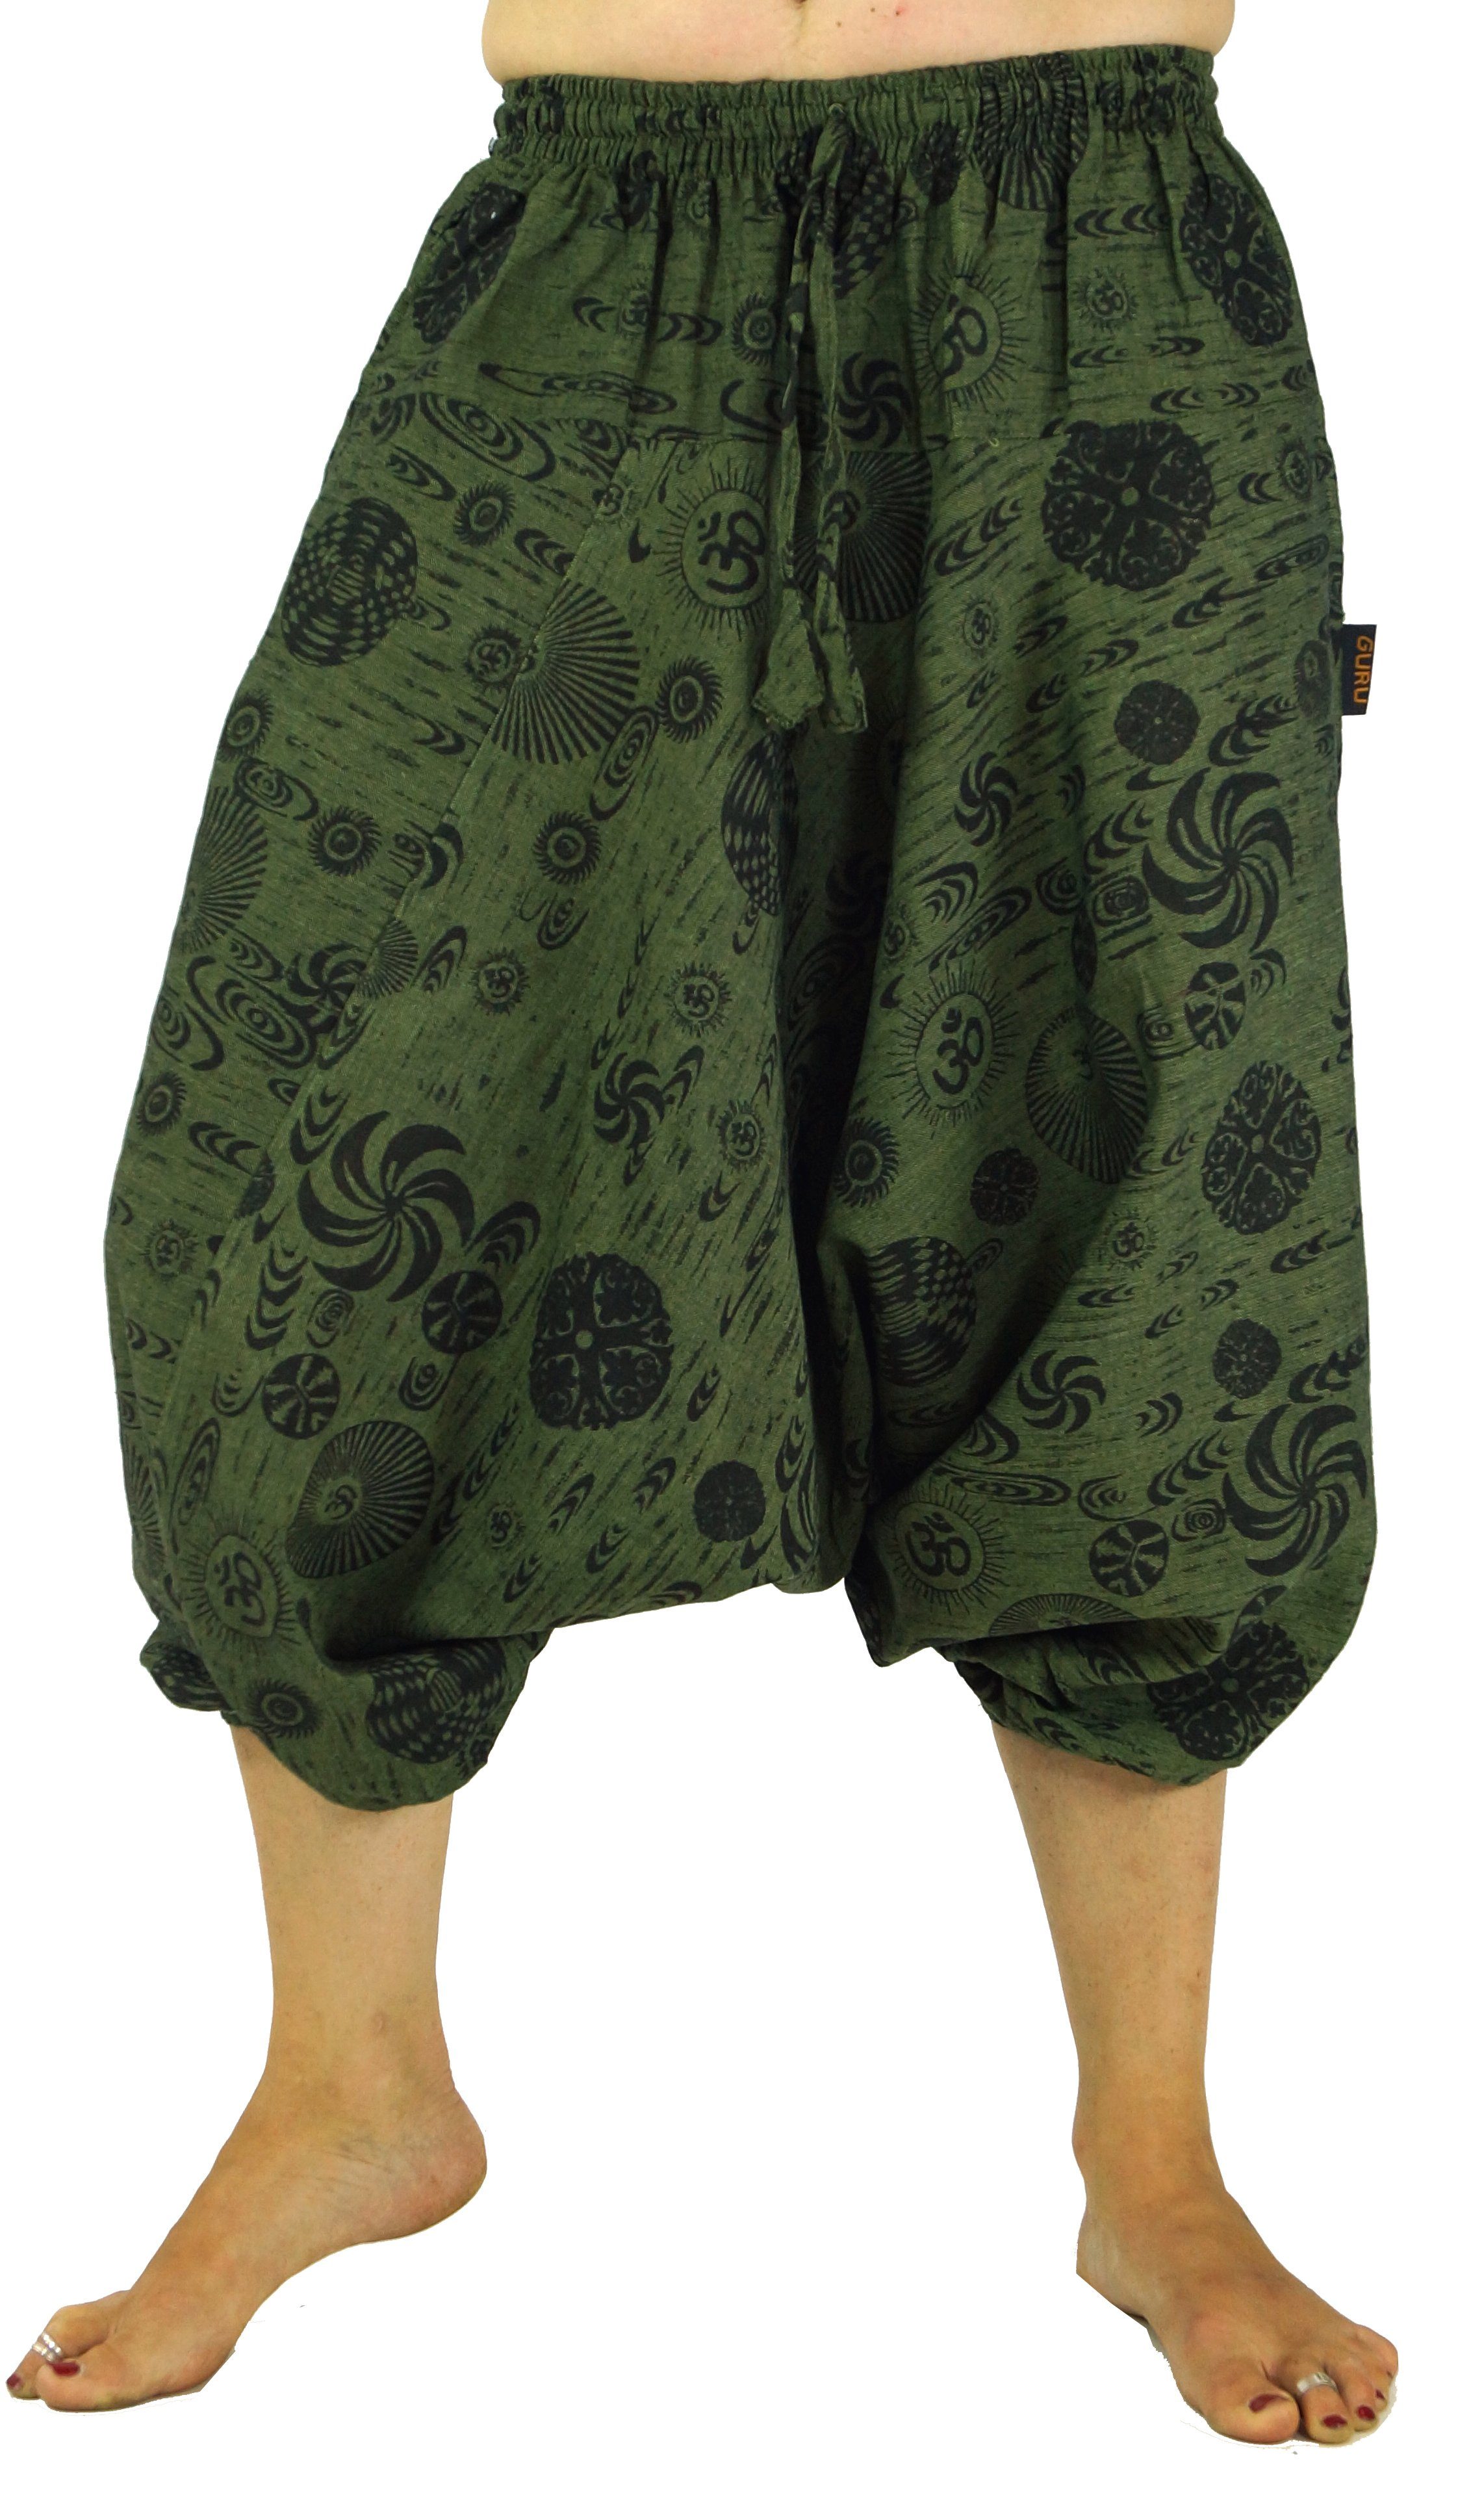 Guru-Shop Relaxhose Aladinhose Pluderhose Shorts 7/8 Länge - grün Ethno Style, alternative Bekleidung